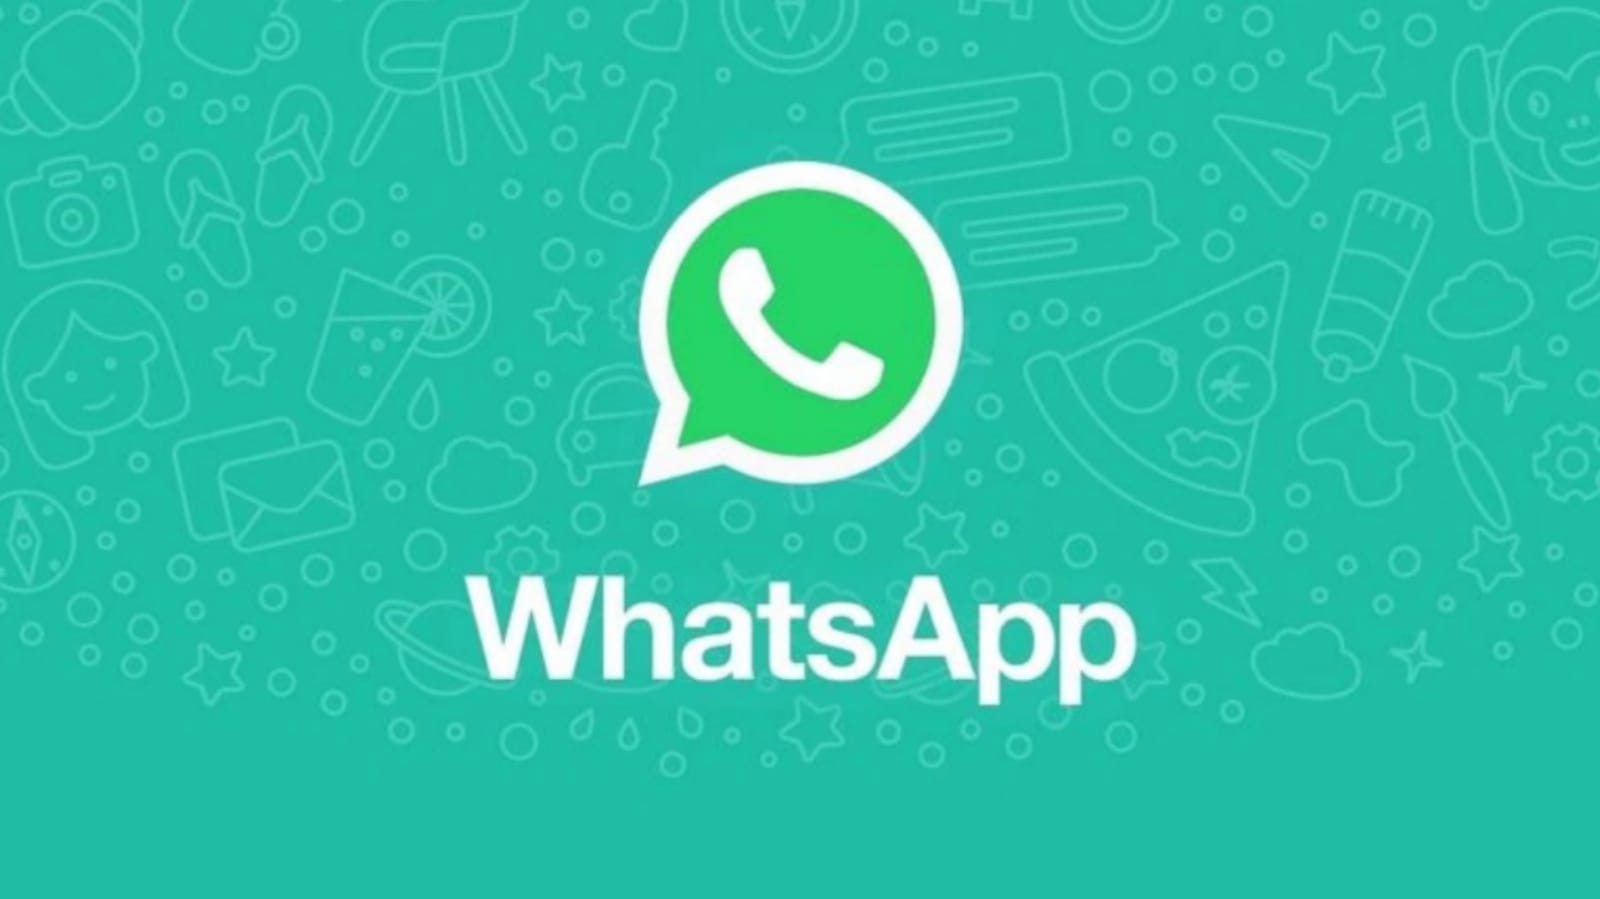 mensajes de WhatsApp celular apagado